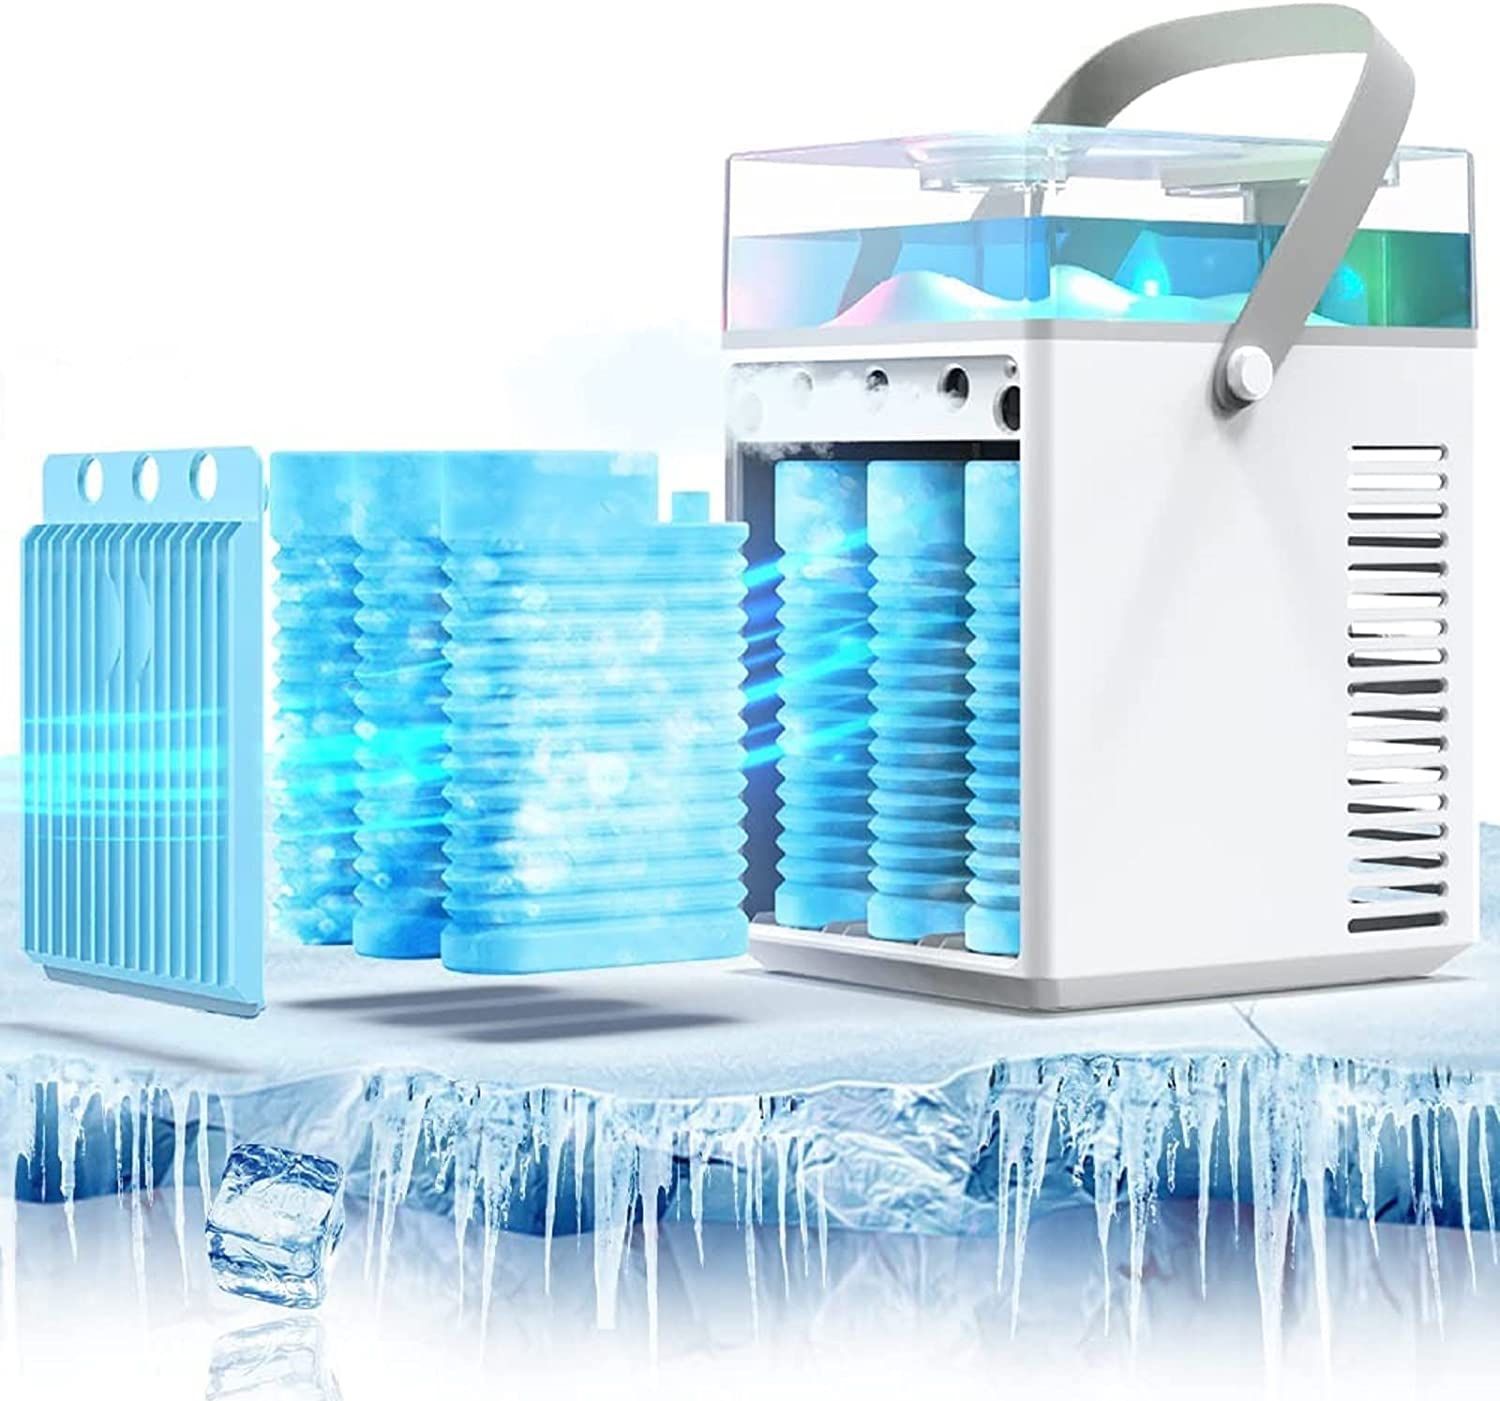 Portable Air Conditioner Fan, Rechargeable 4-IN-1 Cooler Humidifier,3-Speed Evaporative Air Cooler,Cordless AC Desktop Spray Fan, Desktop Cooling Fan